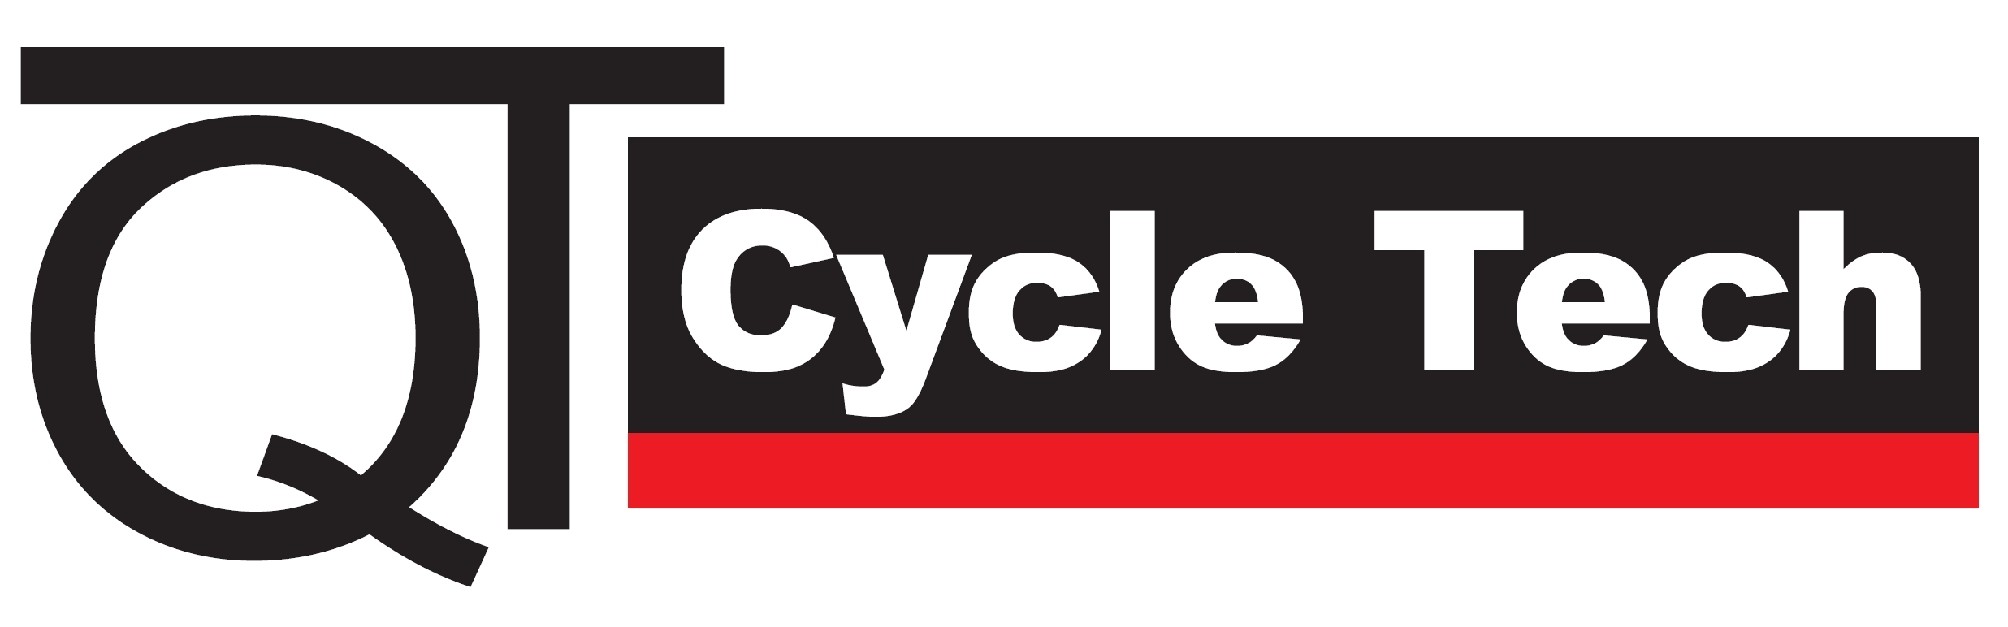 CYCLE TECH